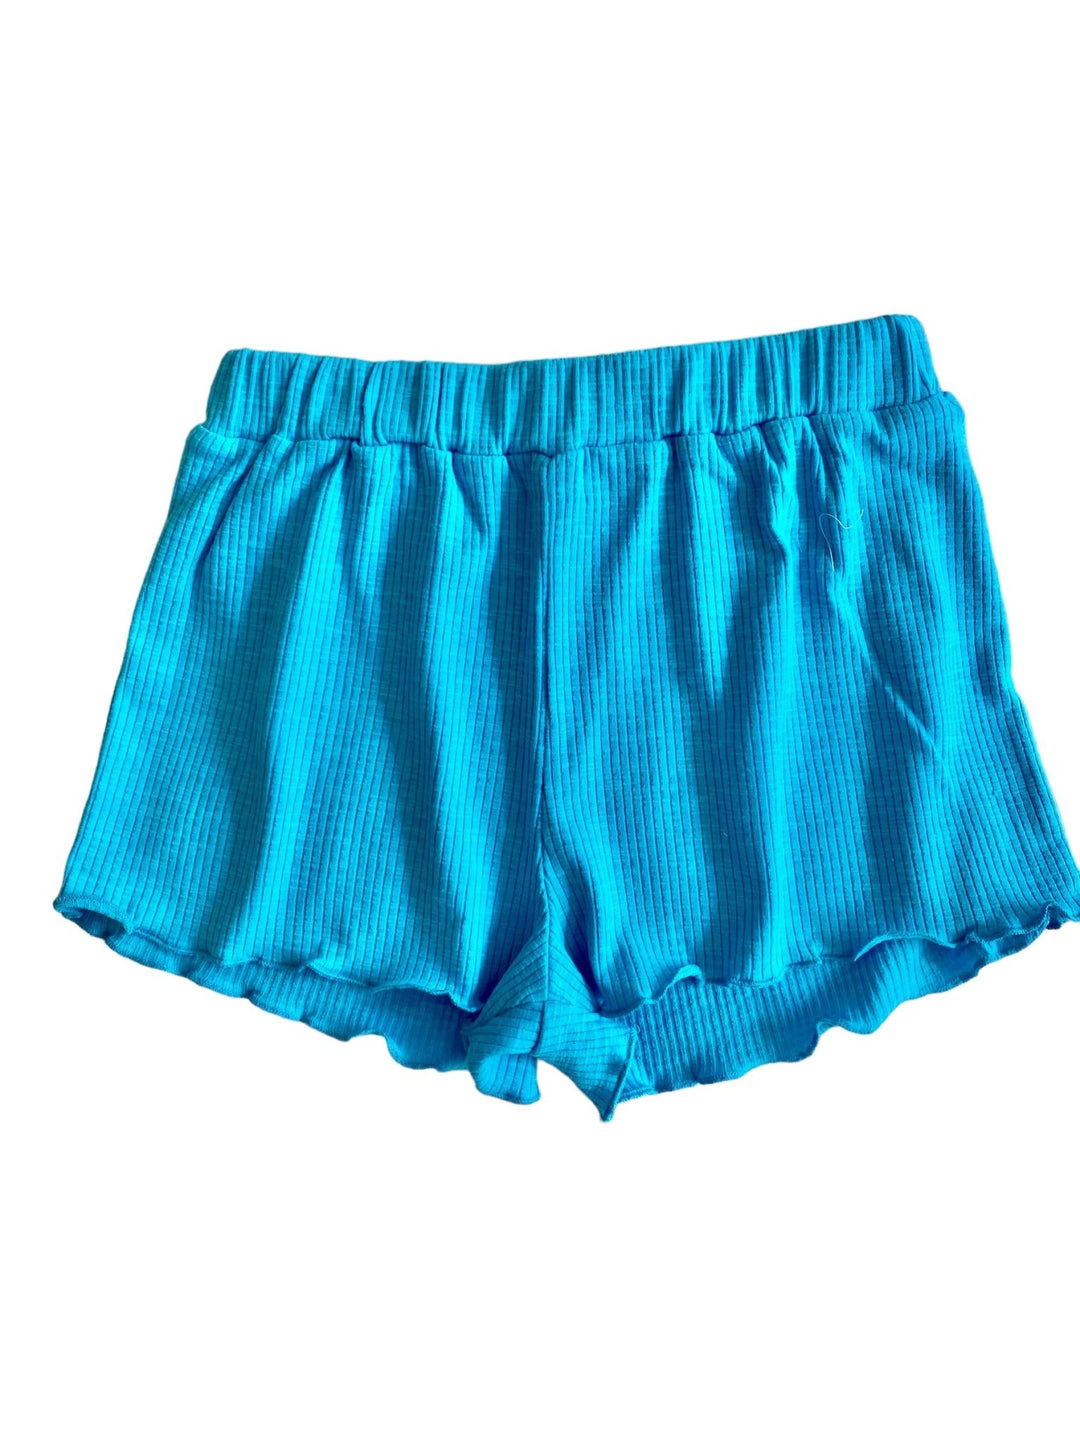 Cool Aqua Shorts - jernijacks